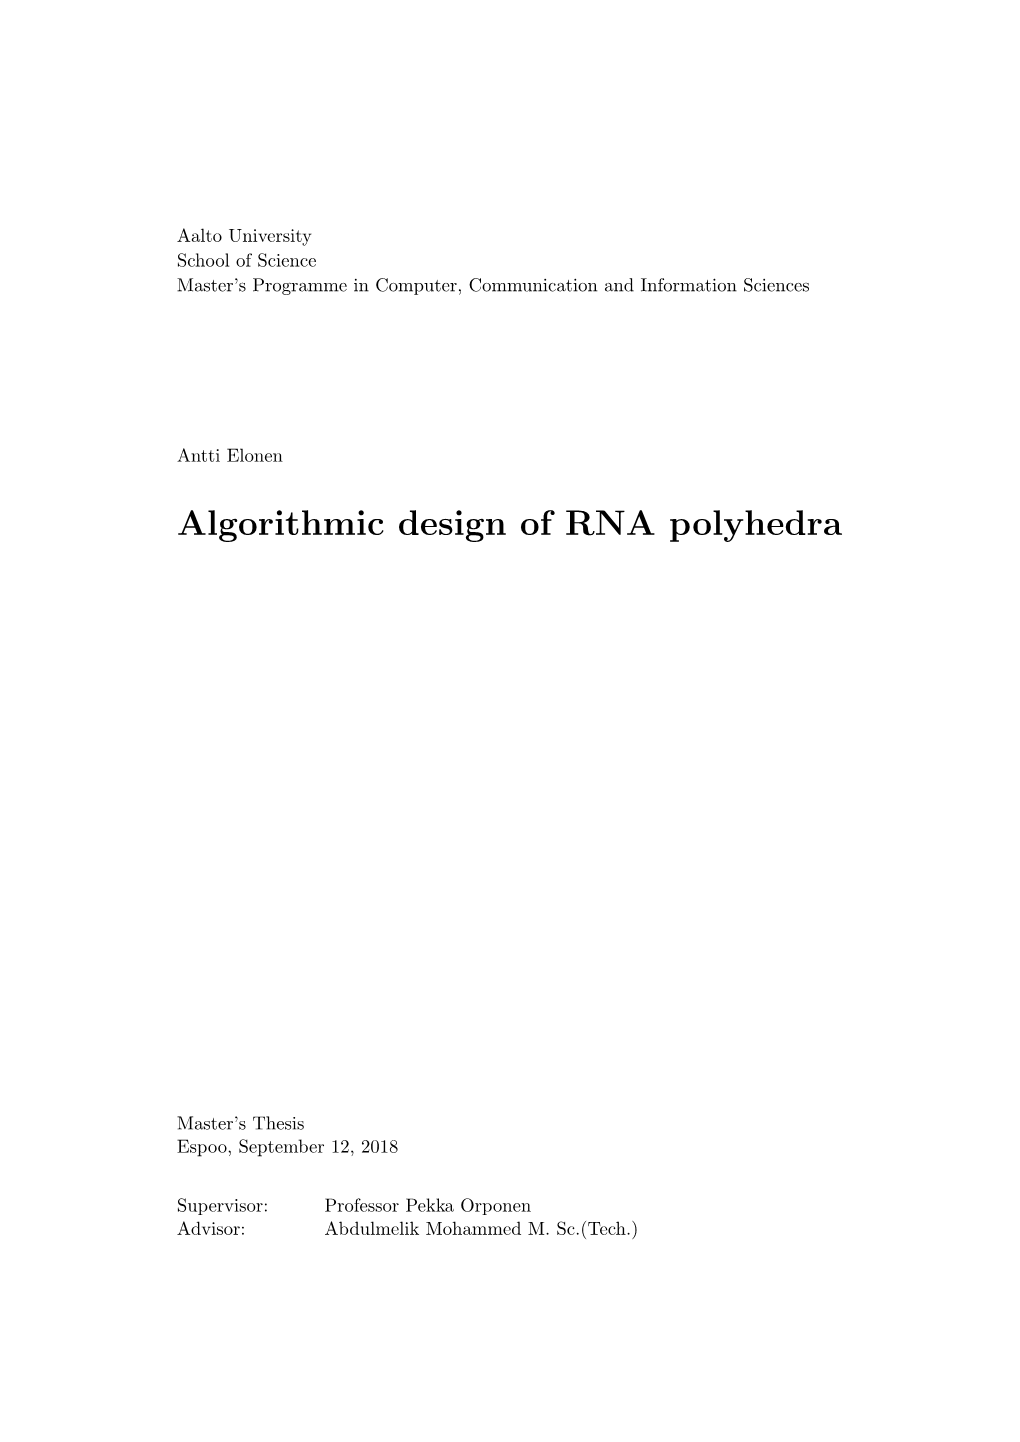 Algorithmic Design of RNA Polyhedra